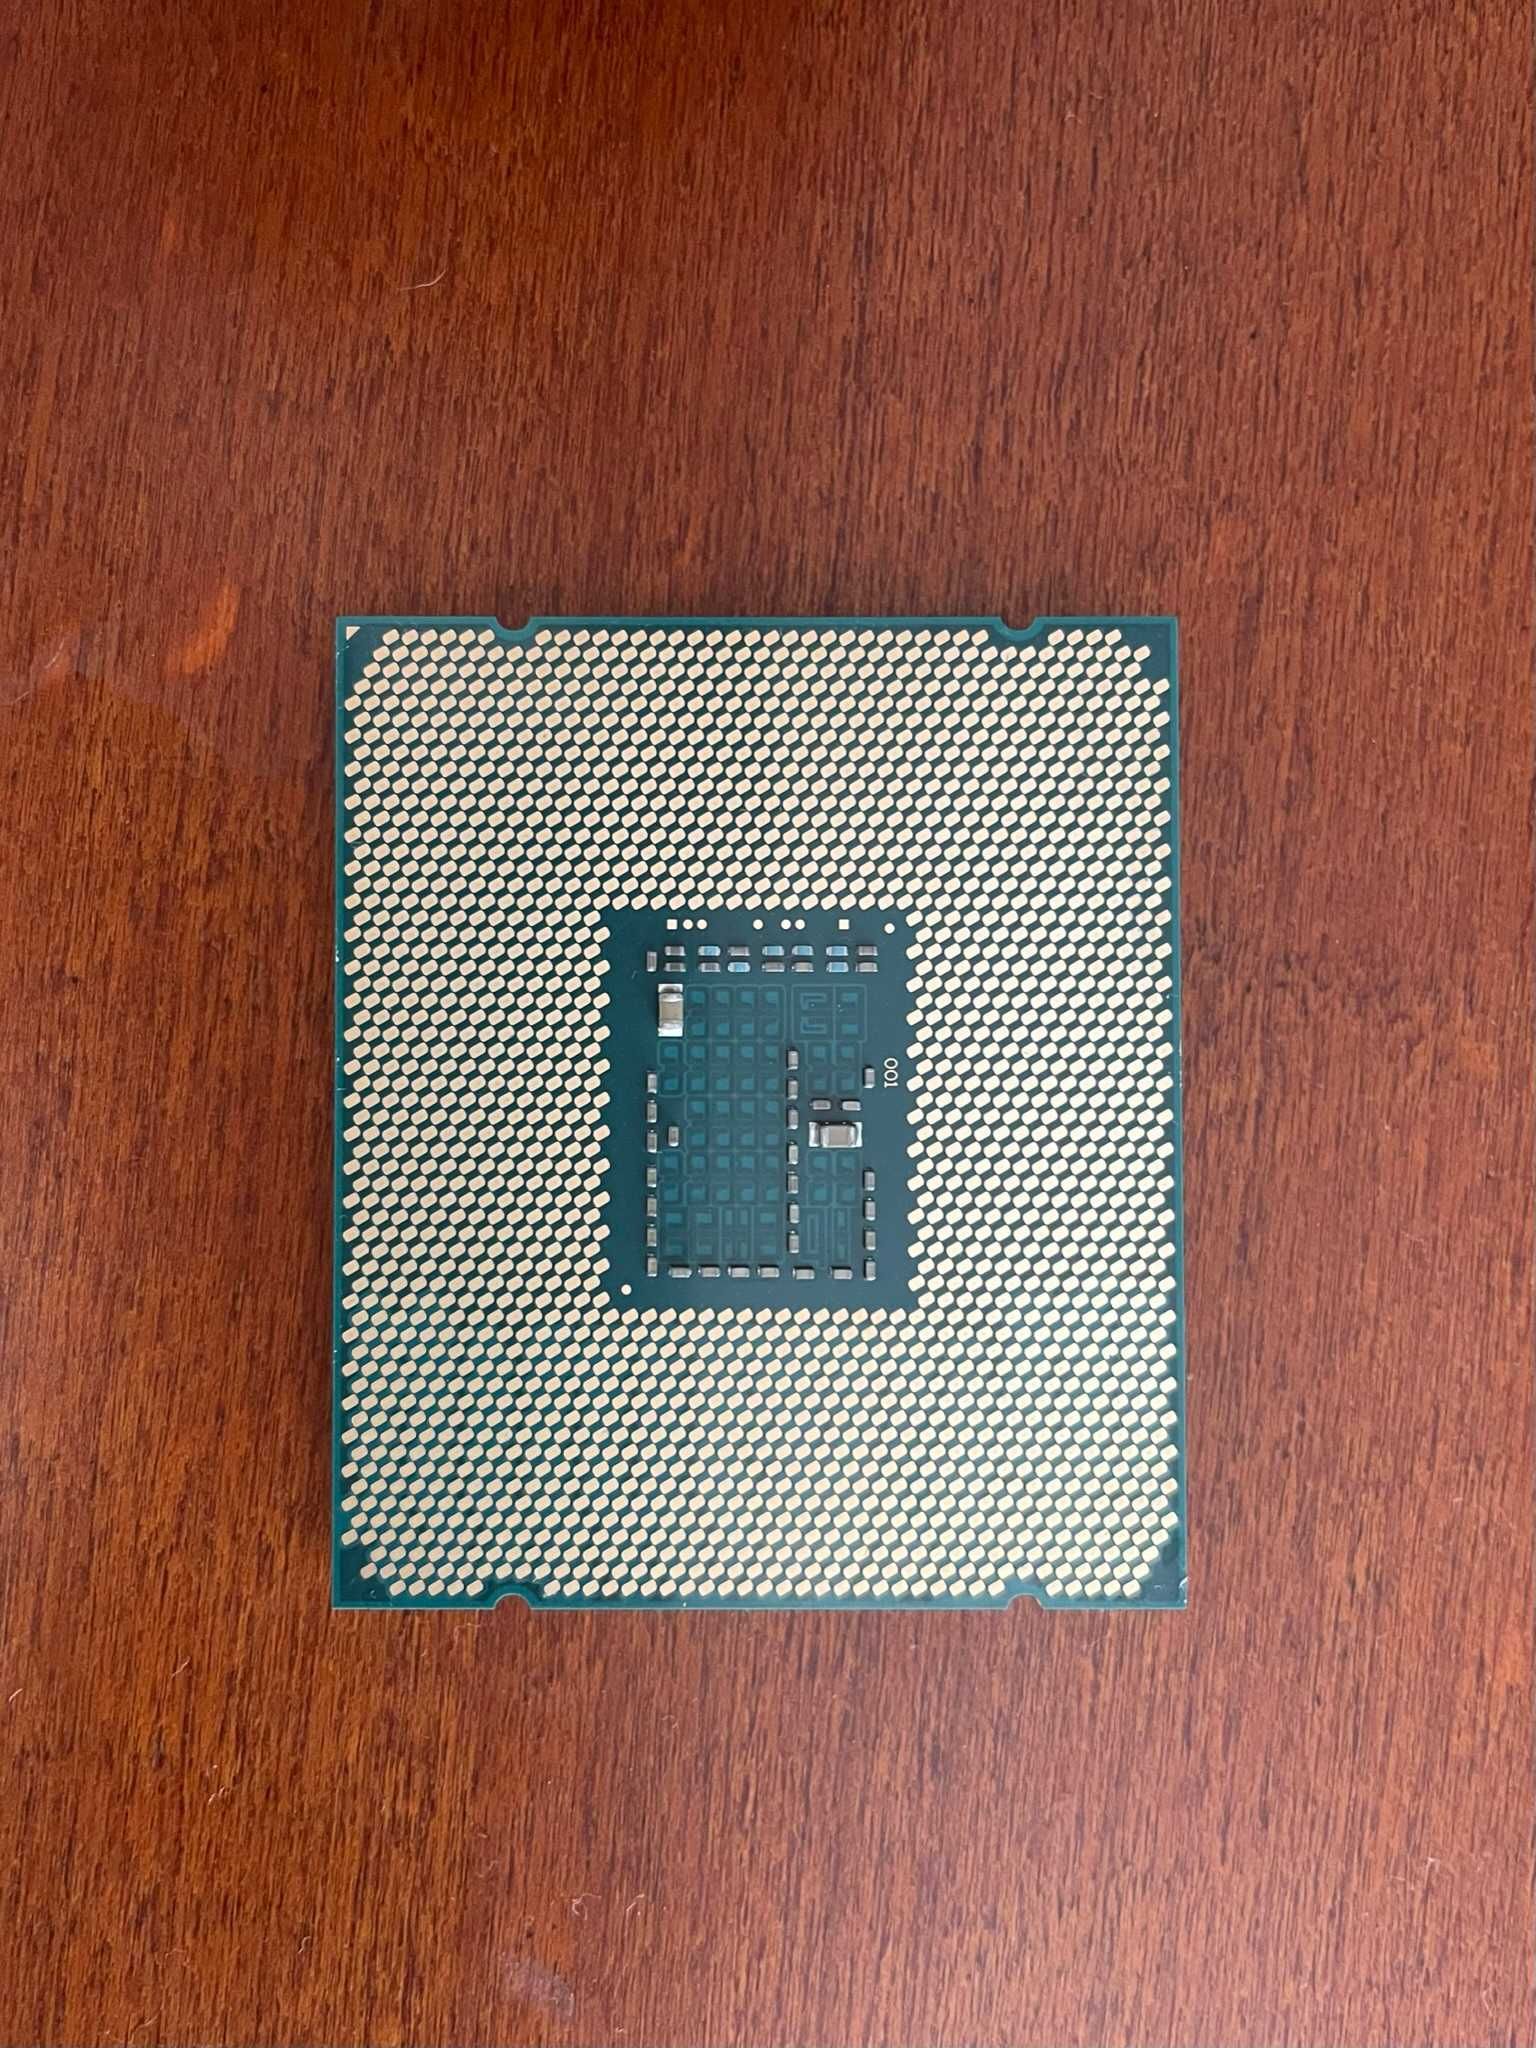 Procesor Intel Xeon E5-2678v3 CPU 2.5 GHz | LGA2011 Socket